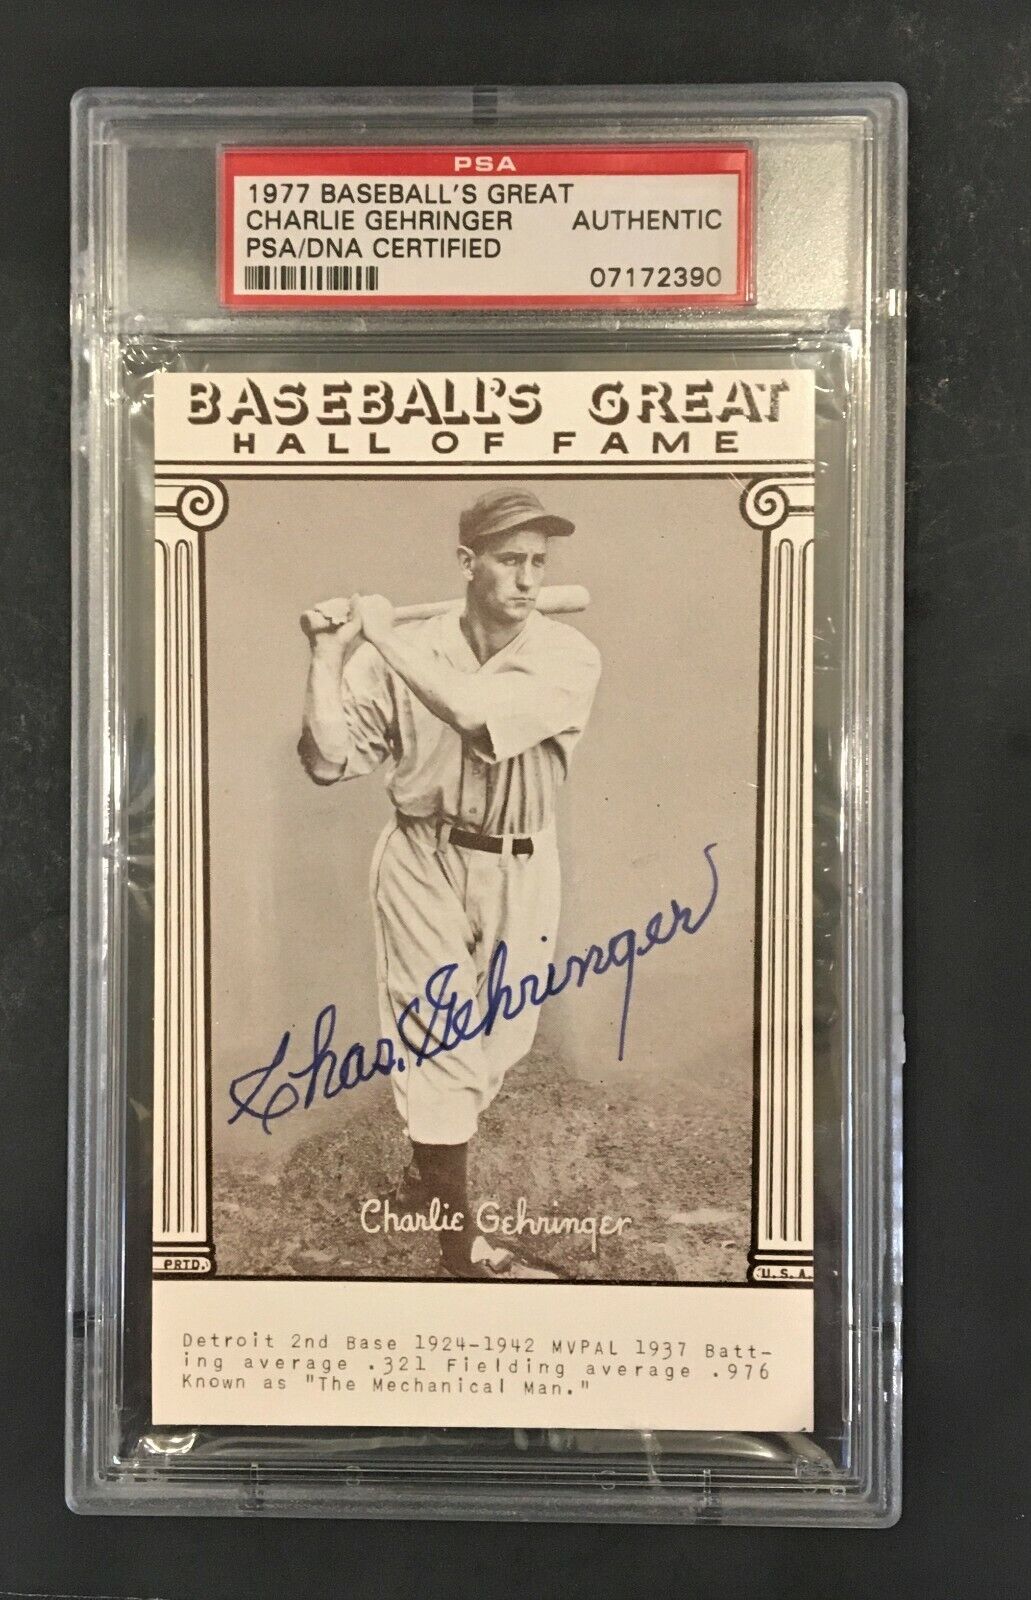 Charles Gehringer,HOF, autographed Baseball Greats Postcard, PSA/DNA certified